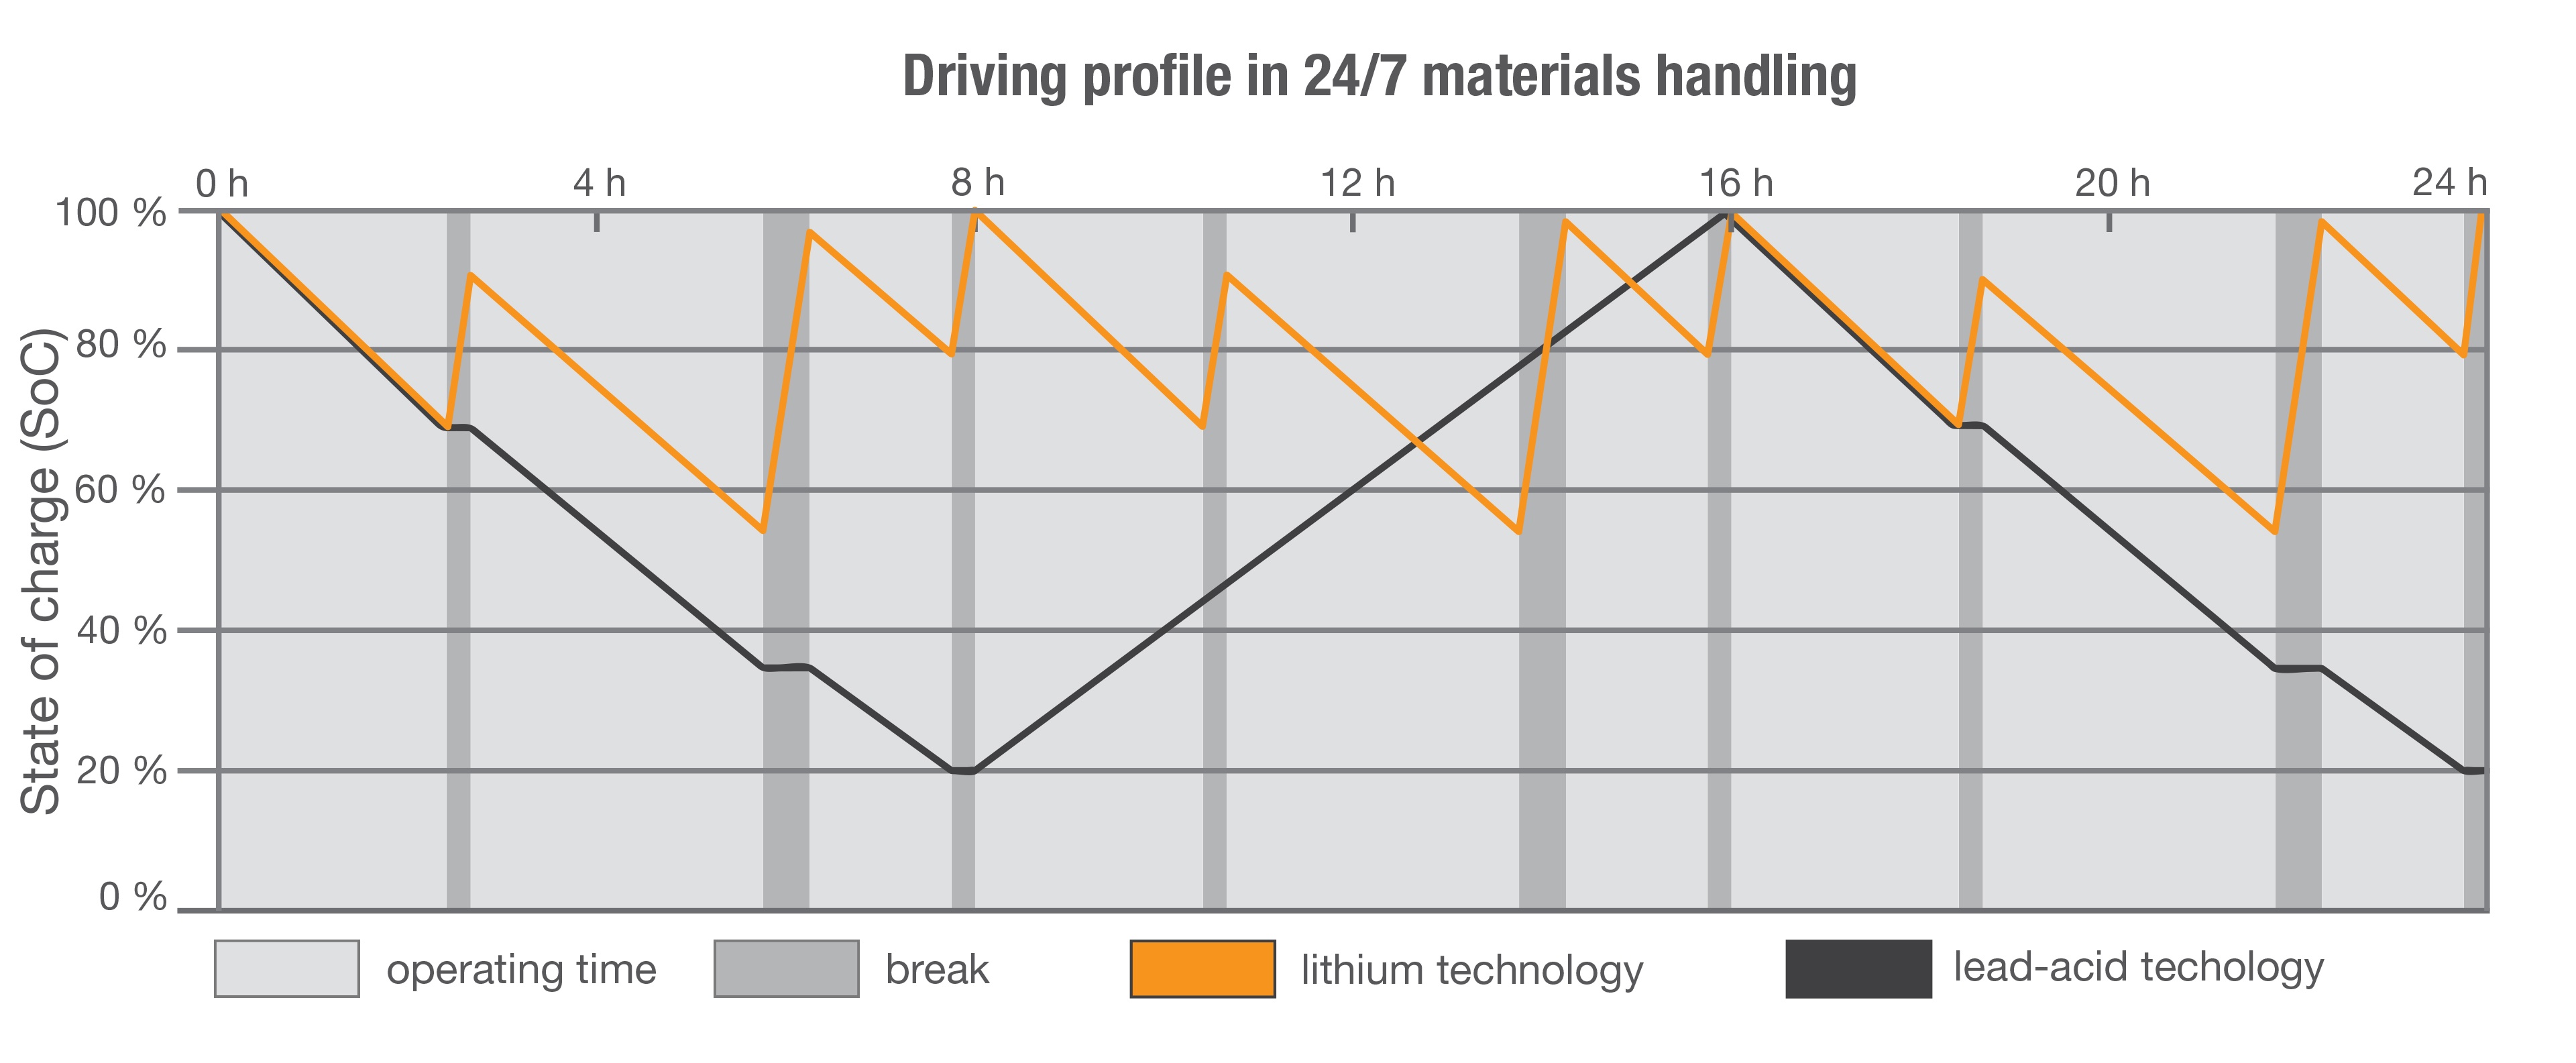 Driving profile in material handling